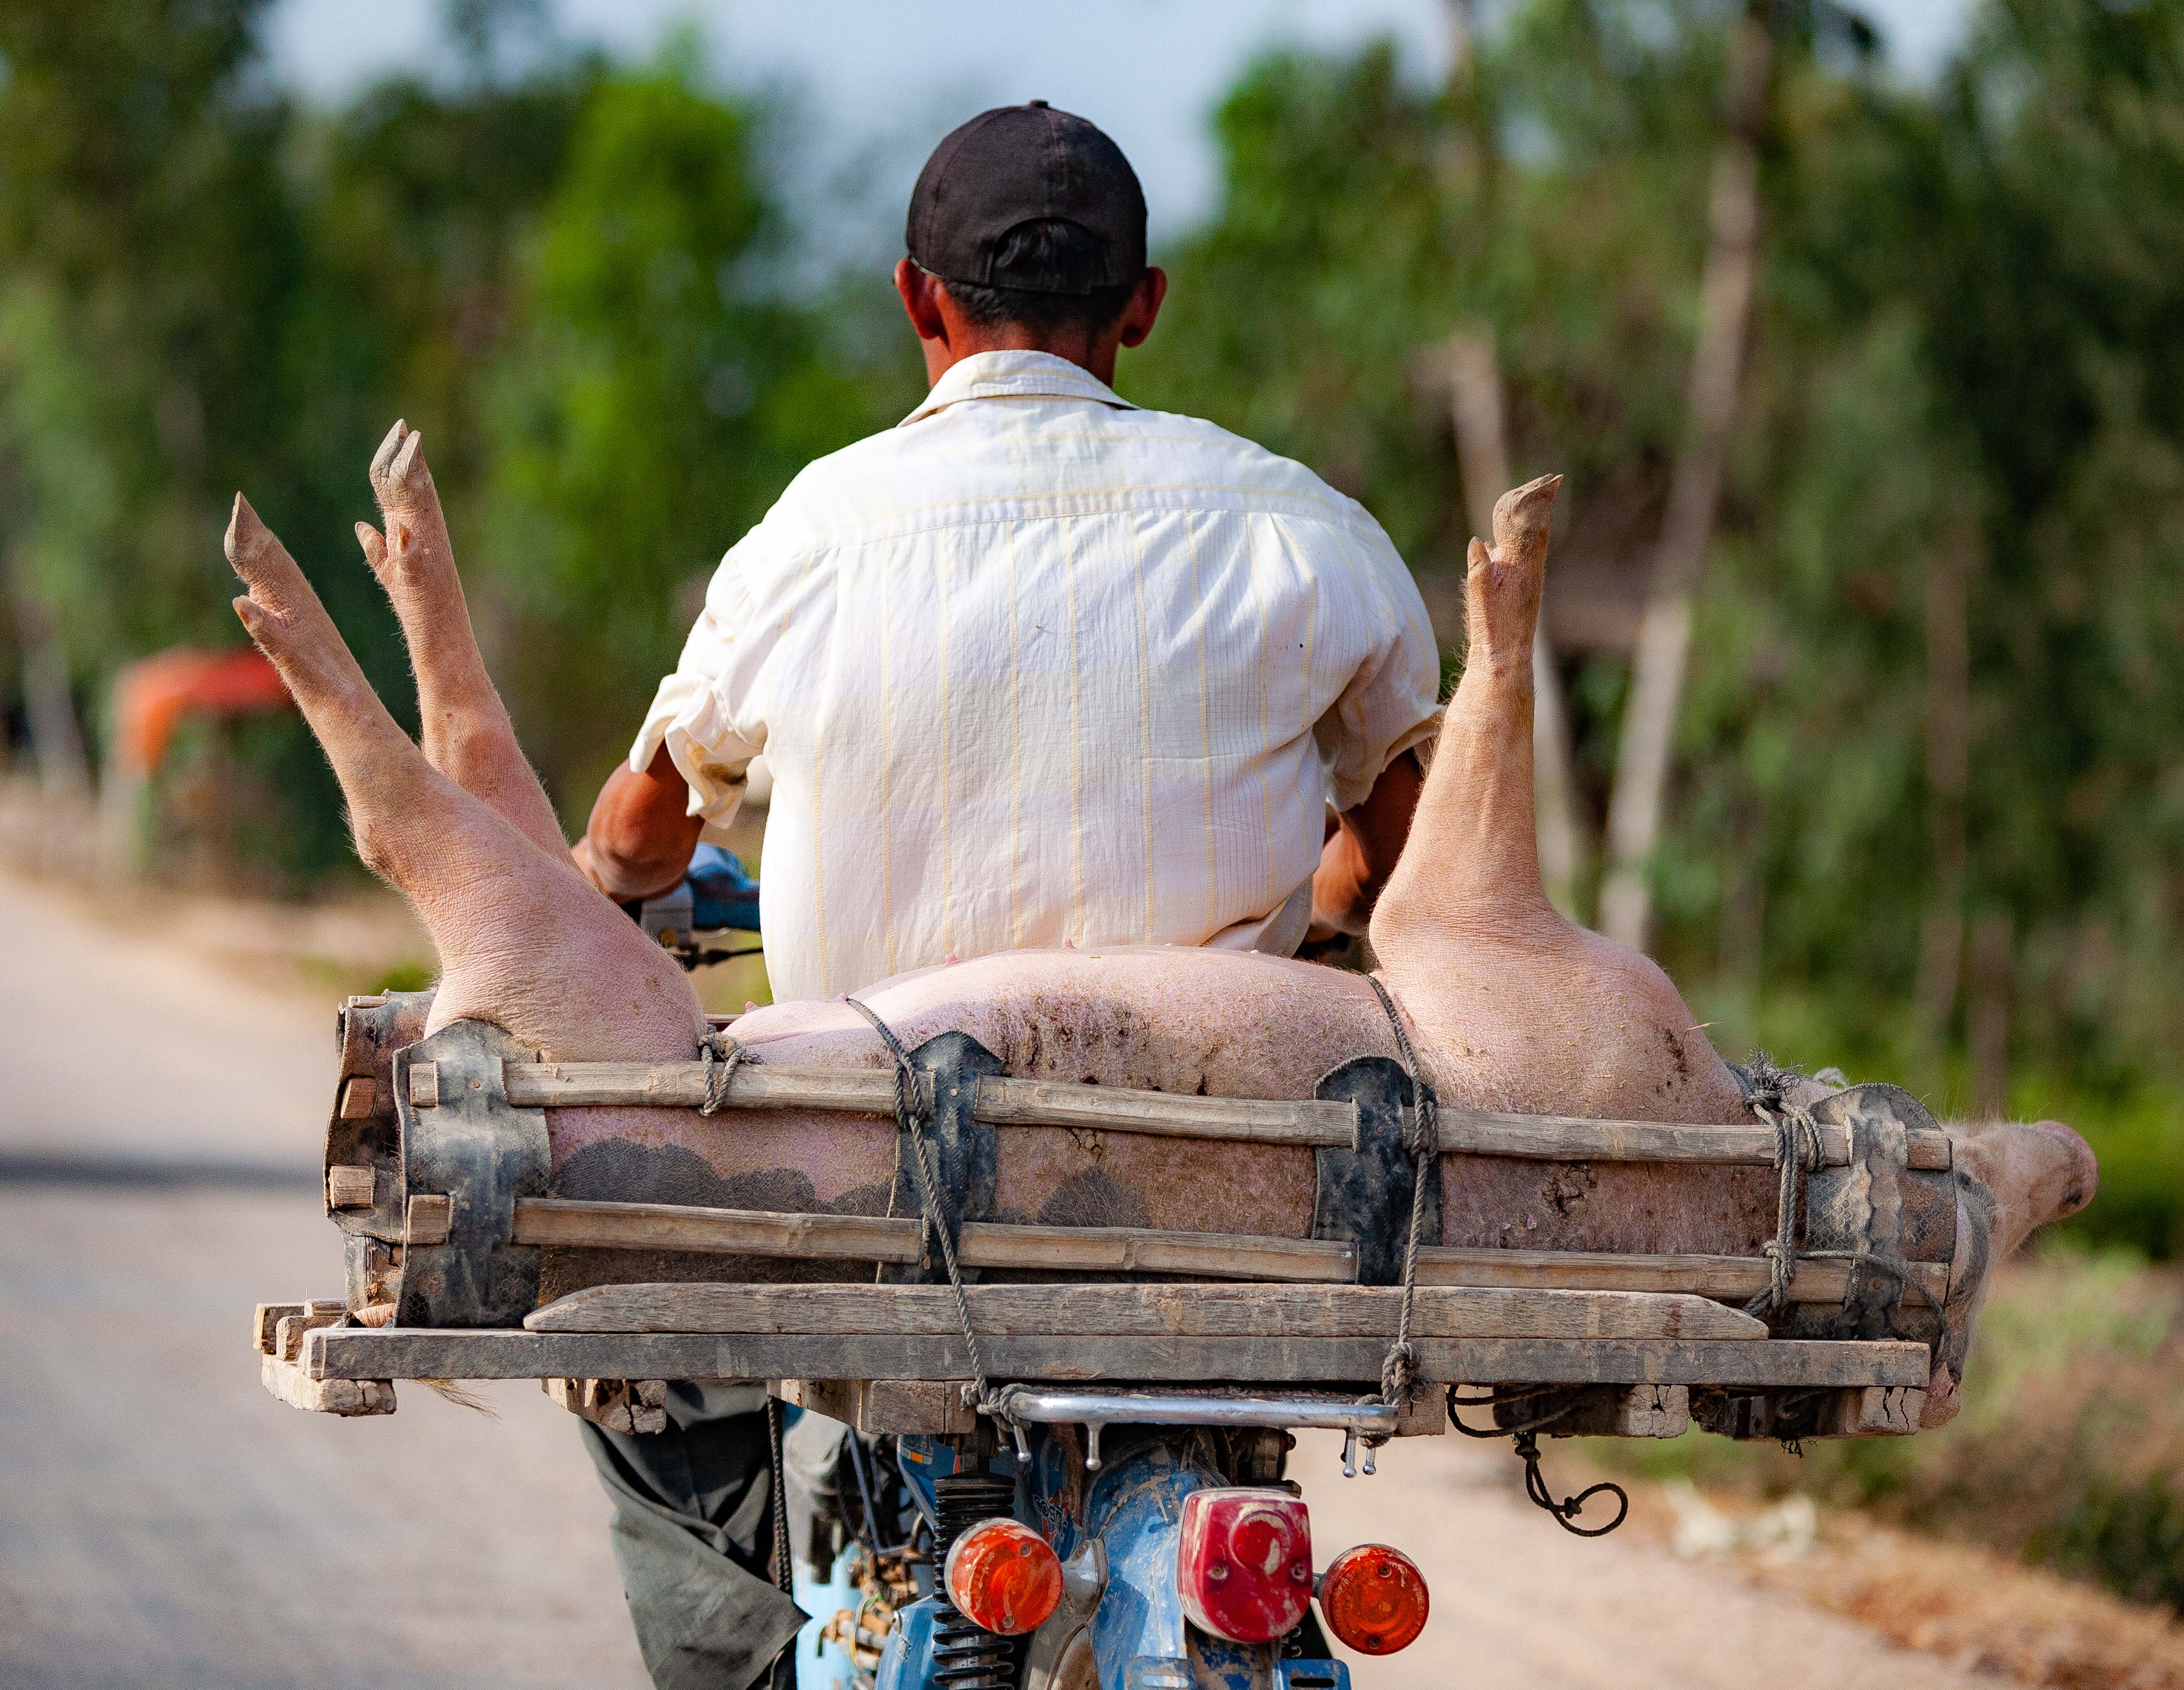 Cambodia, Prey Veaeng Prov, No Way To Treat A Pig, 2010, IMG 5260